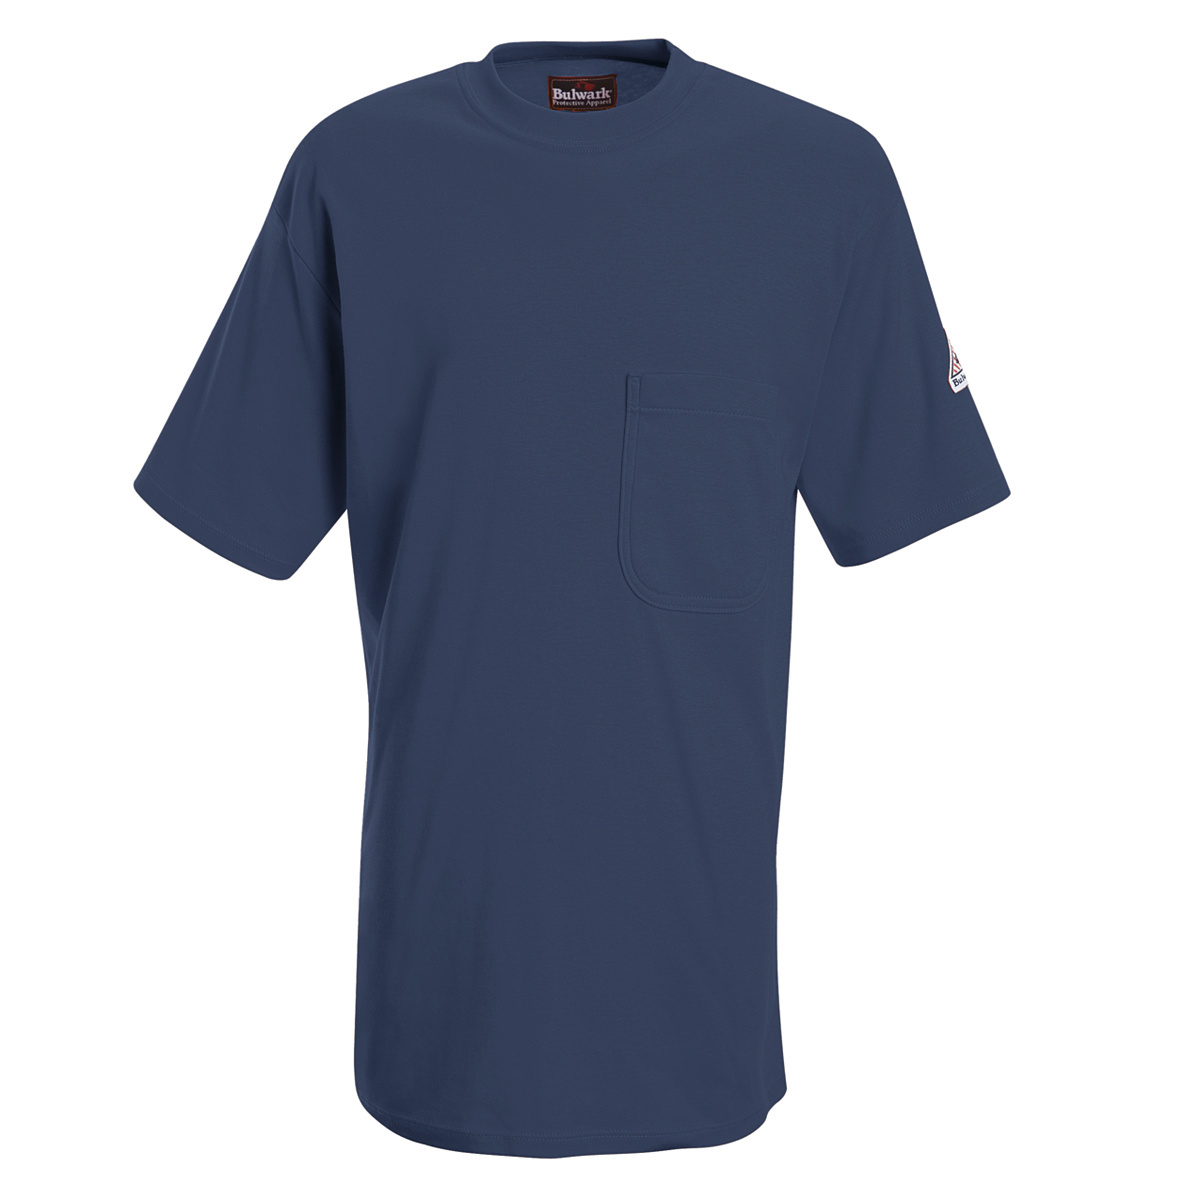 Bulwark® Large Tall Navy Blue EXCEL FR® Interlock FR Cotton Flame Resistant Shirt